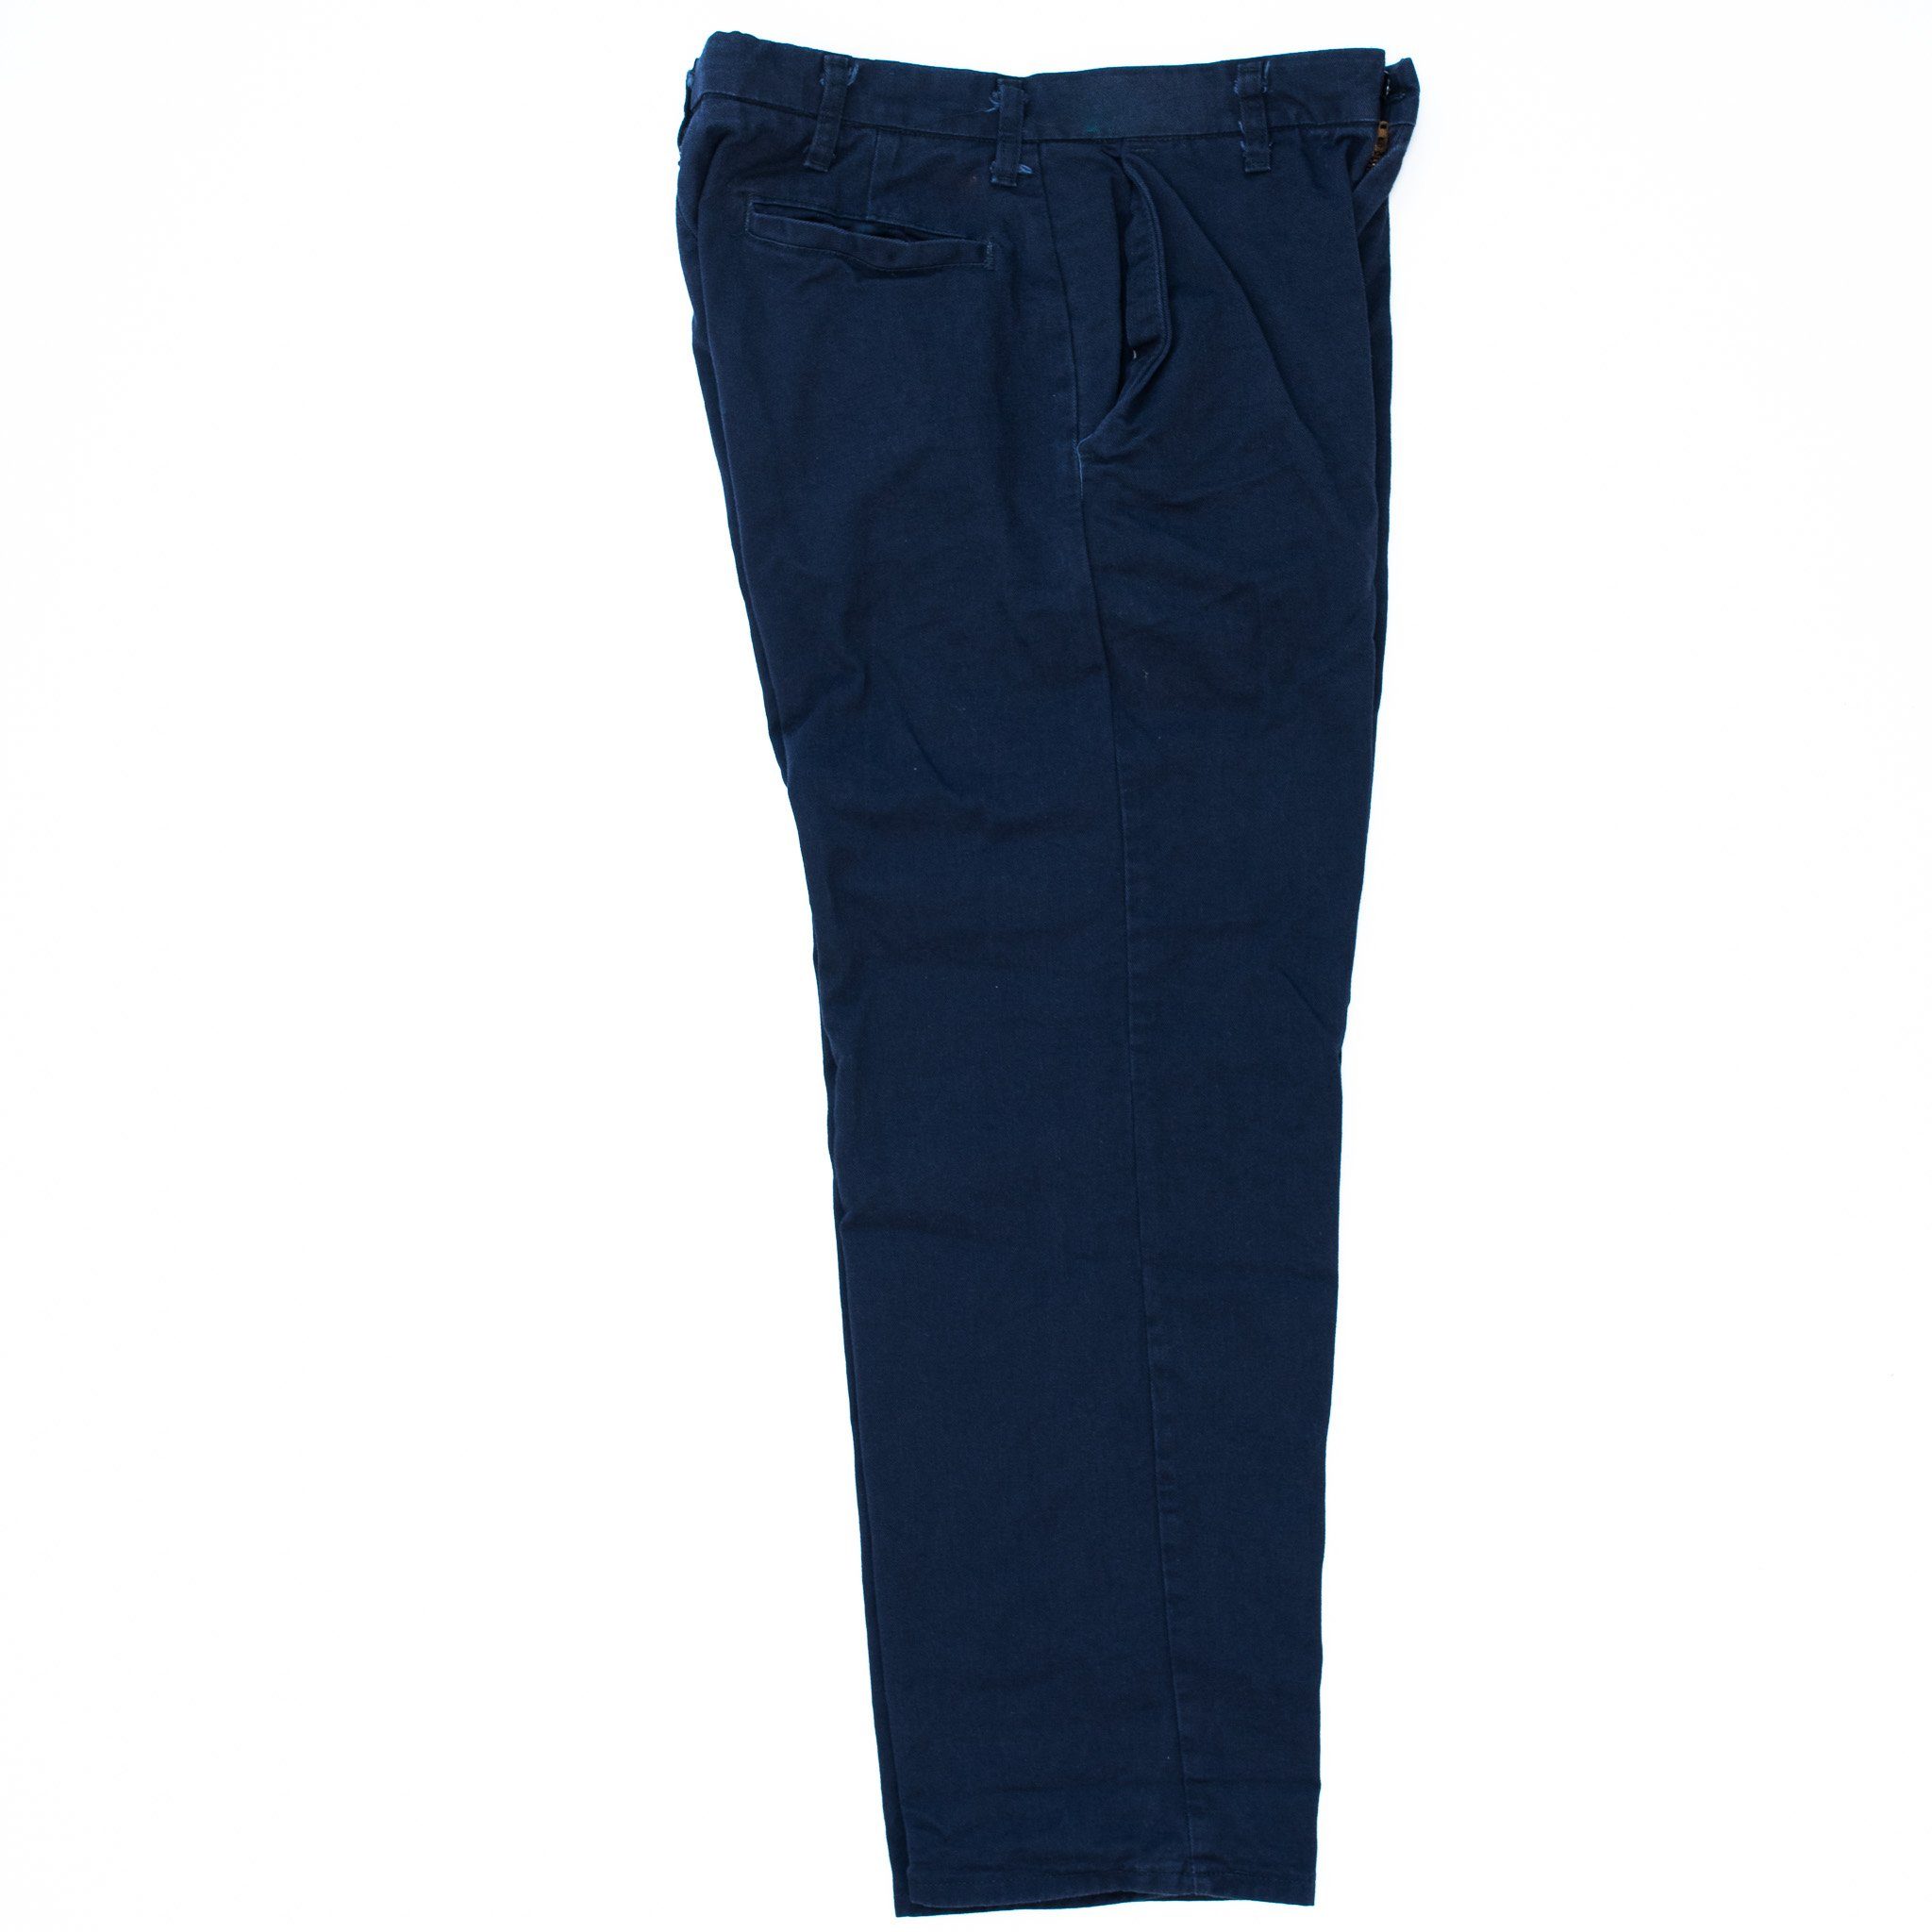 Used FR Work Pants - Navy Blue | Walt's Used Workwear